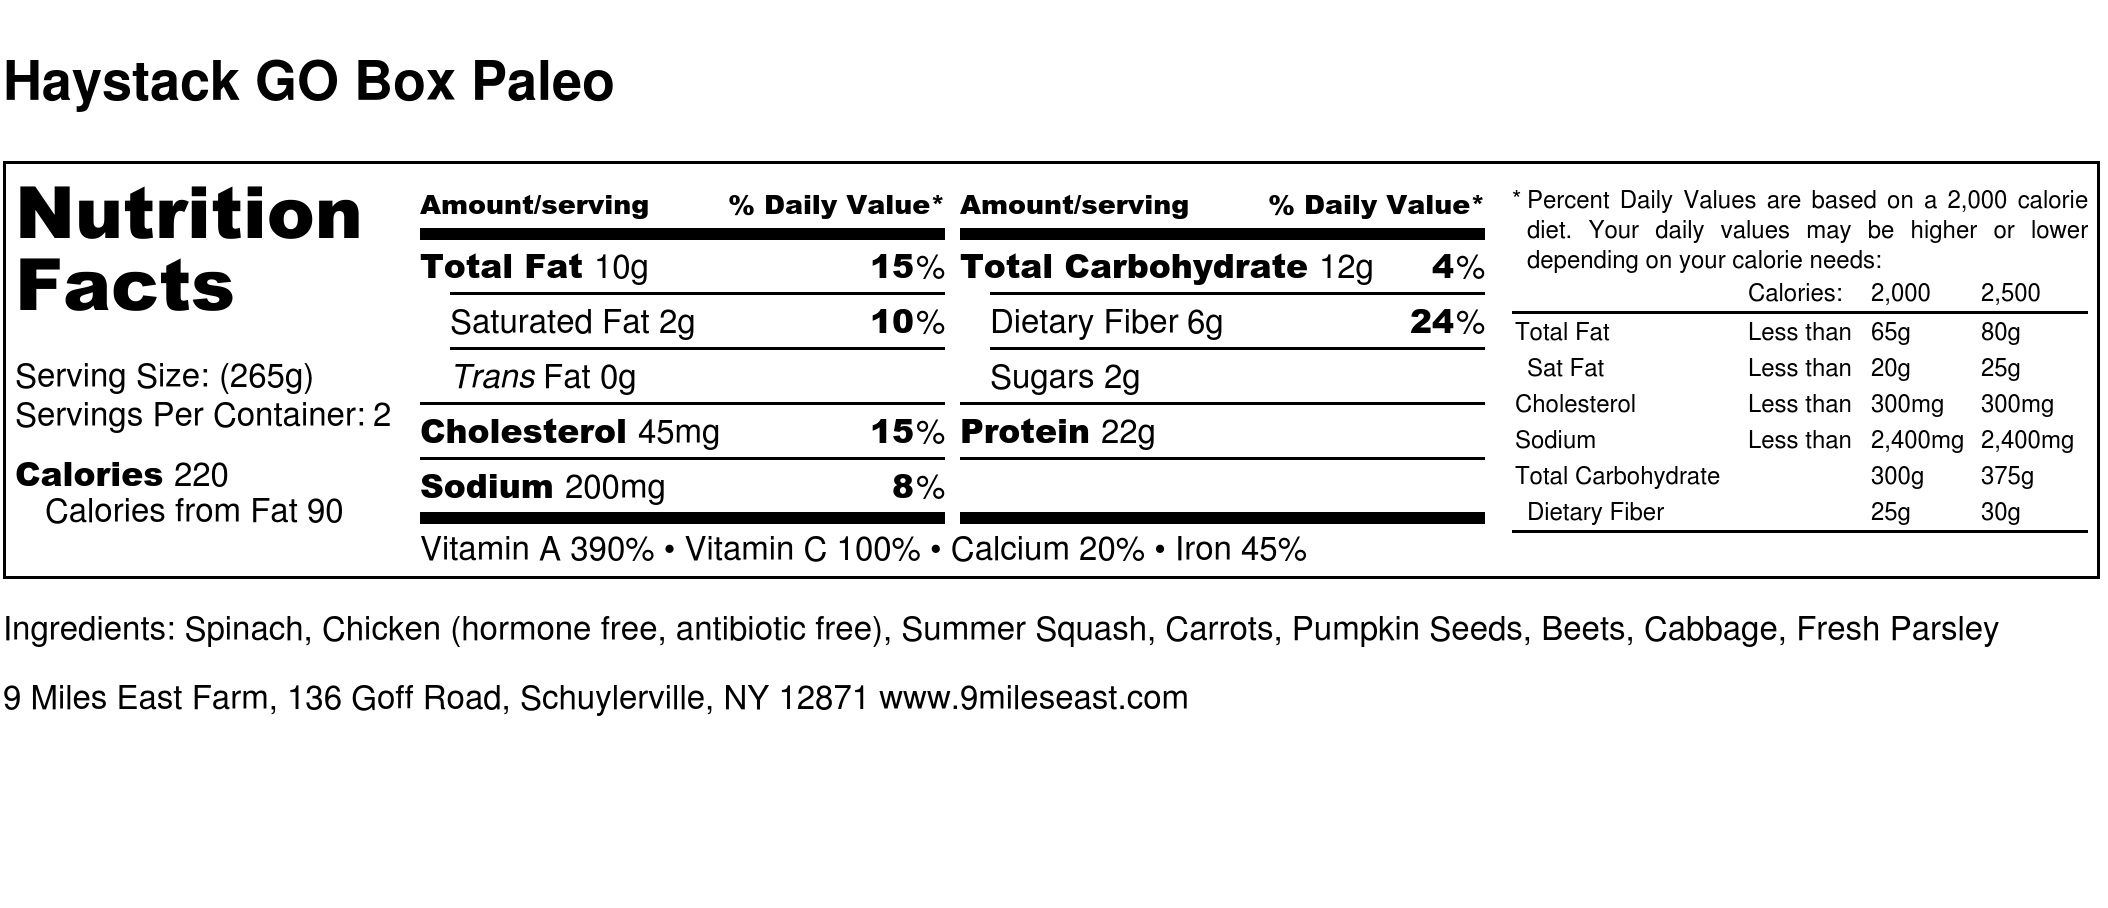 Haystack GO Box Paleo - Nutrition Label.jpg